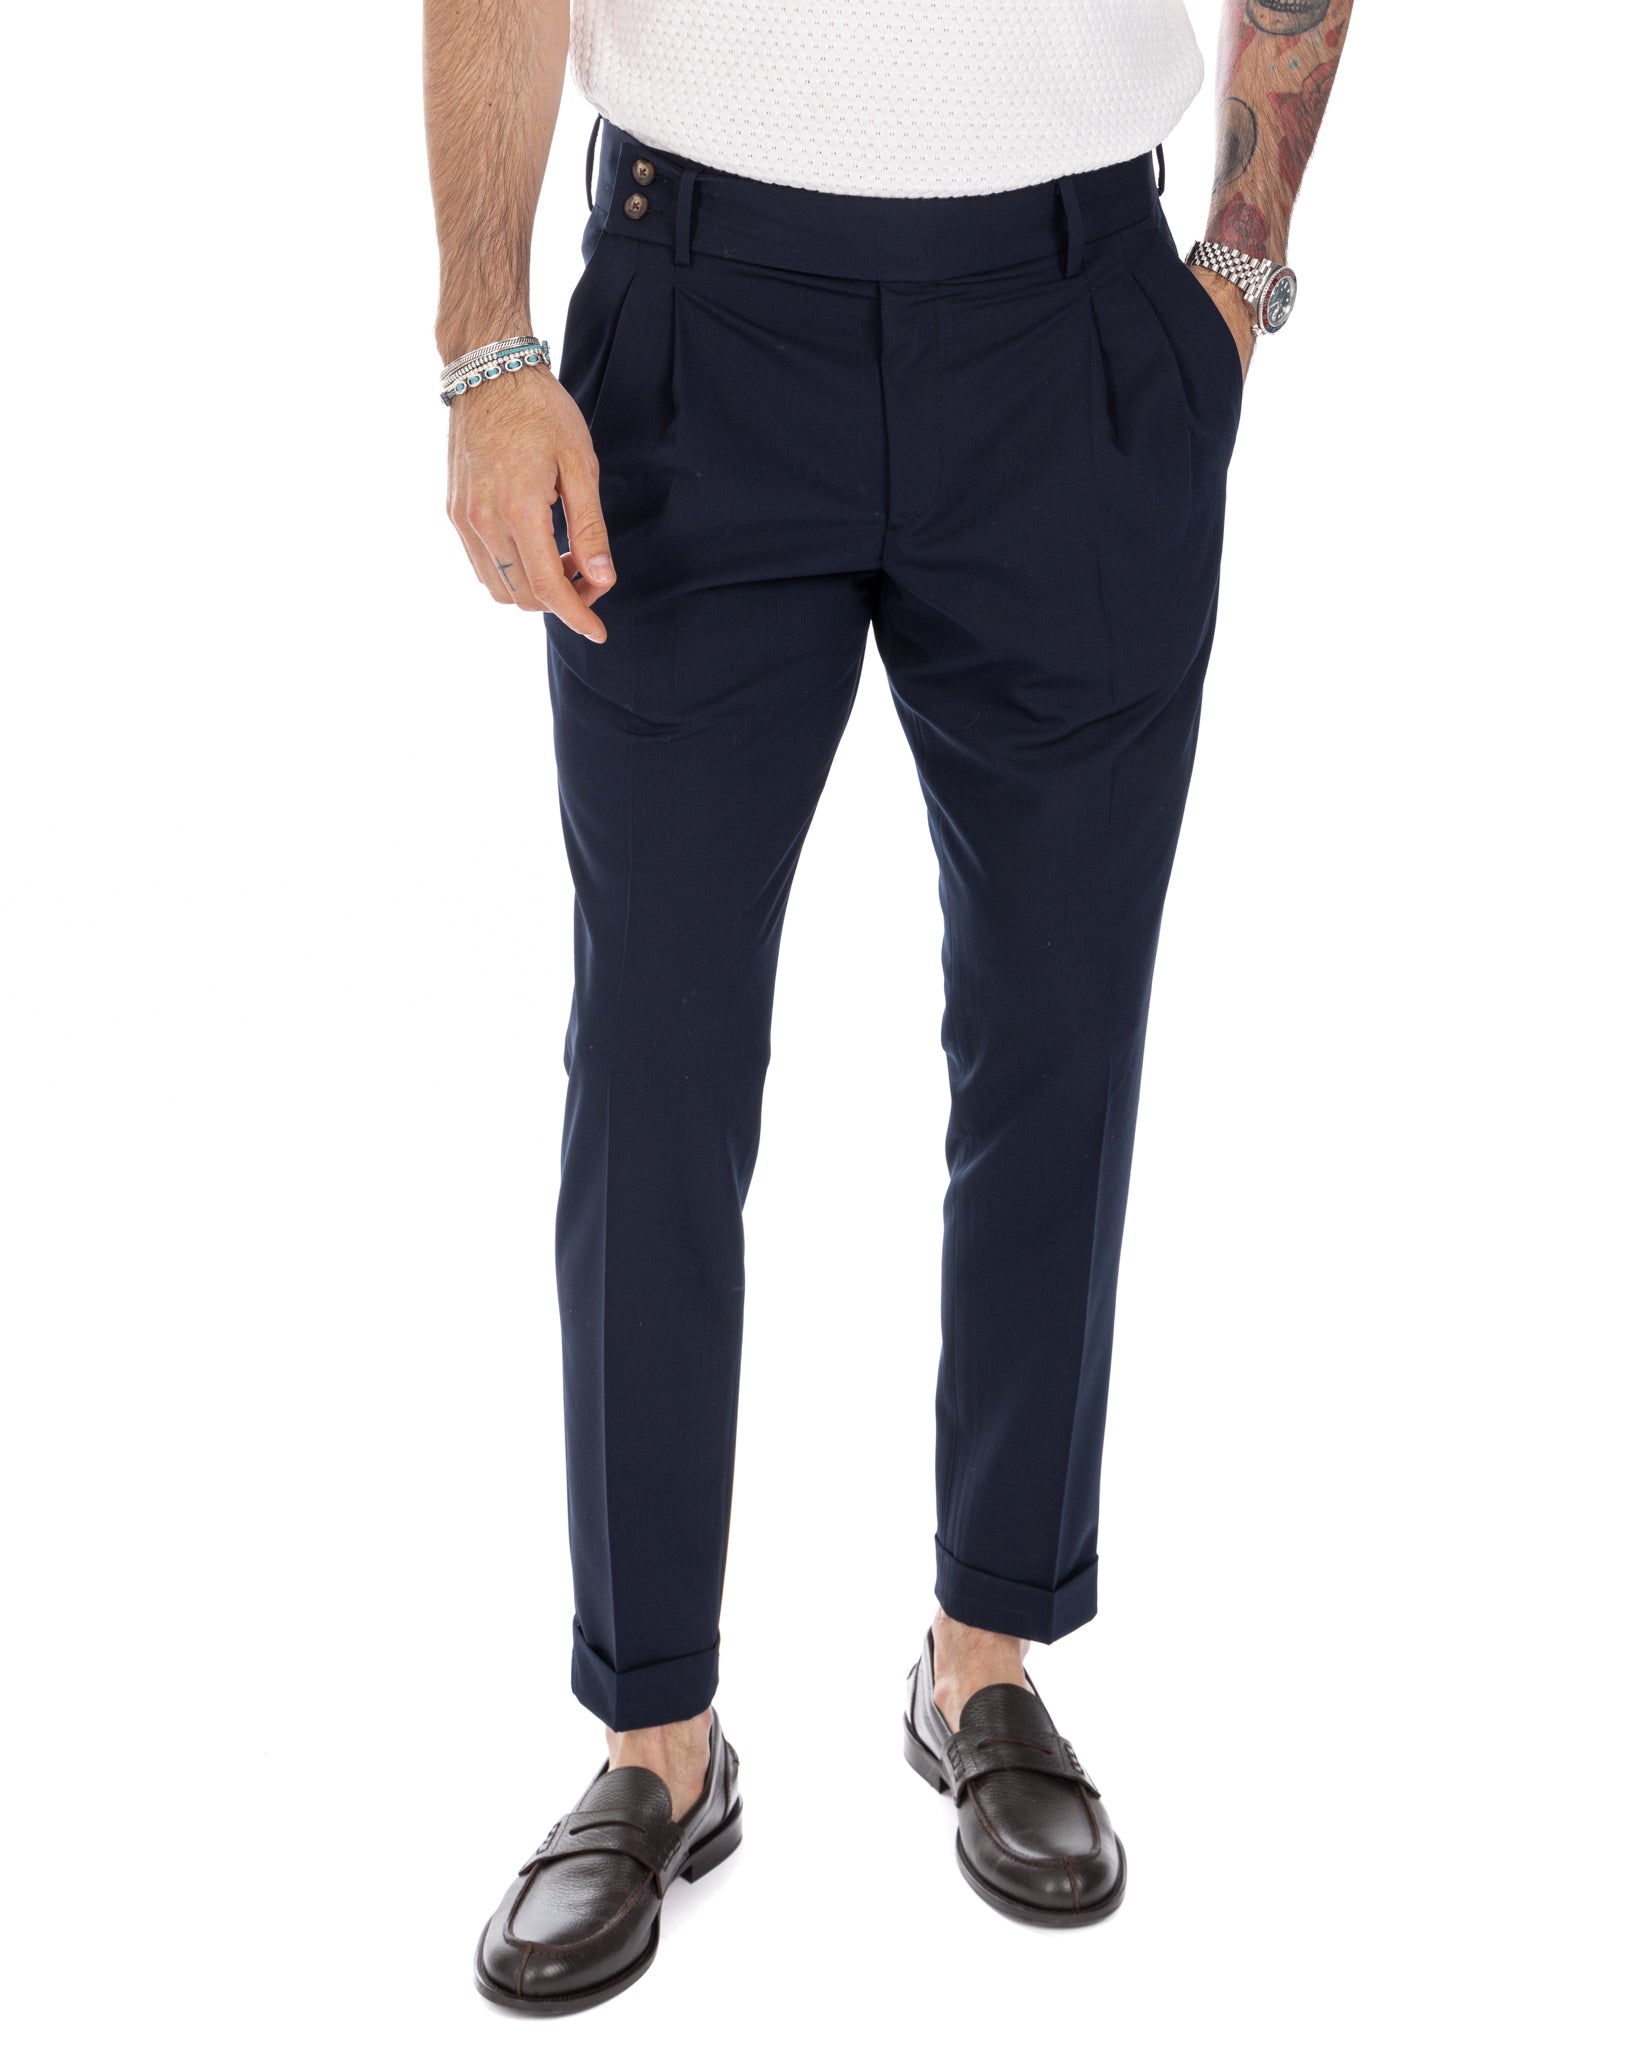 Caprera - blue high waisted trousers